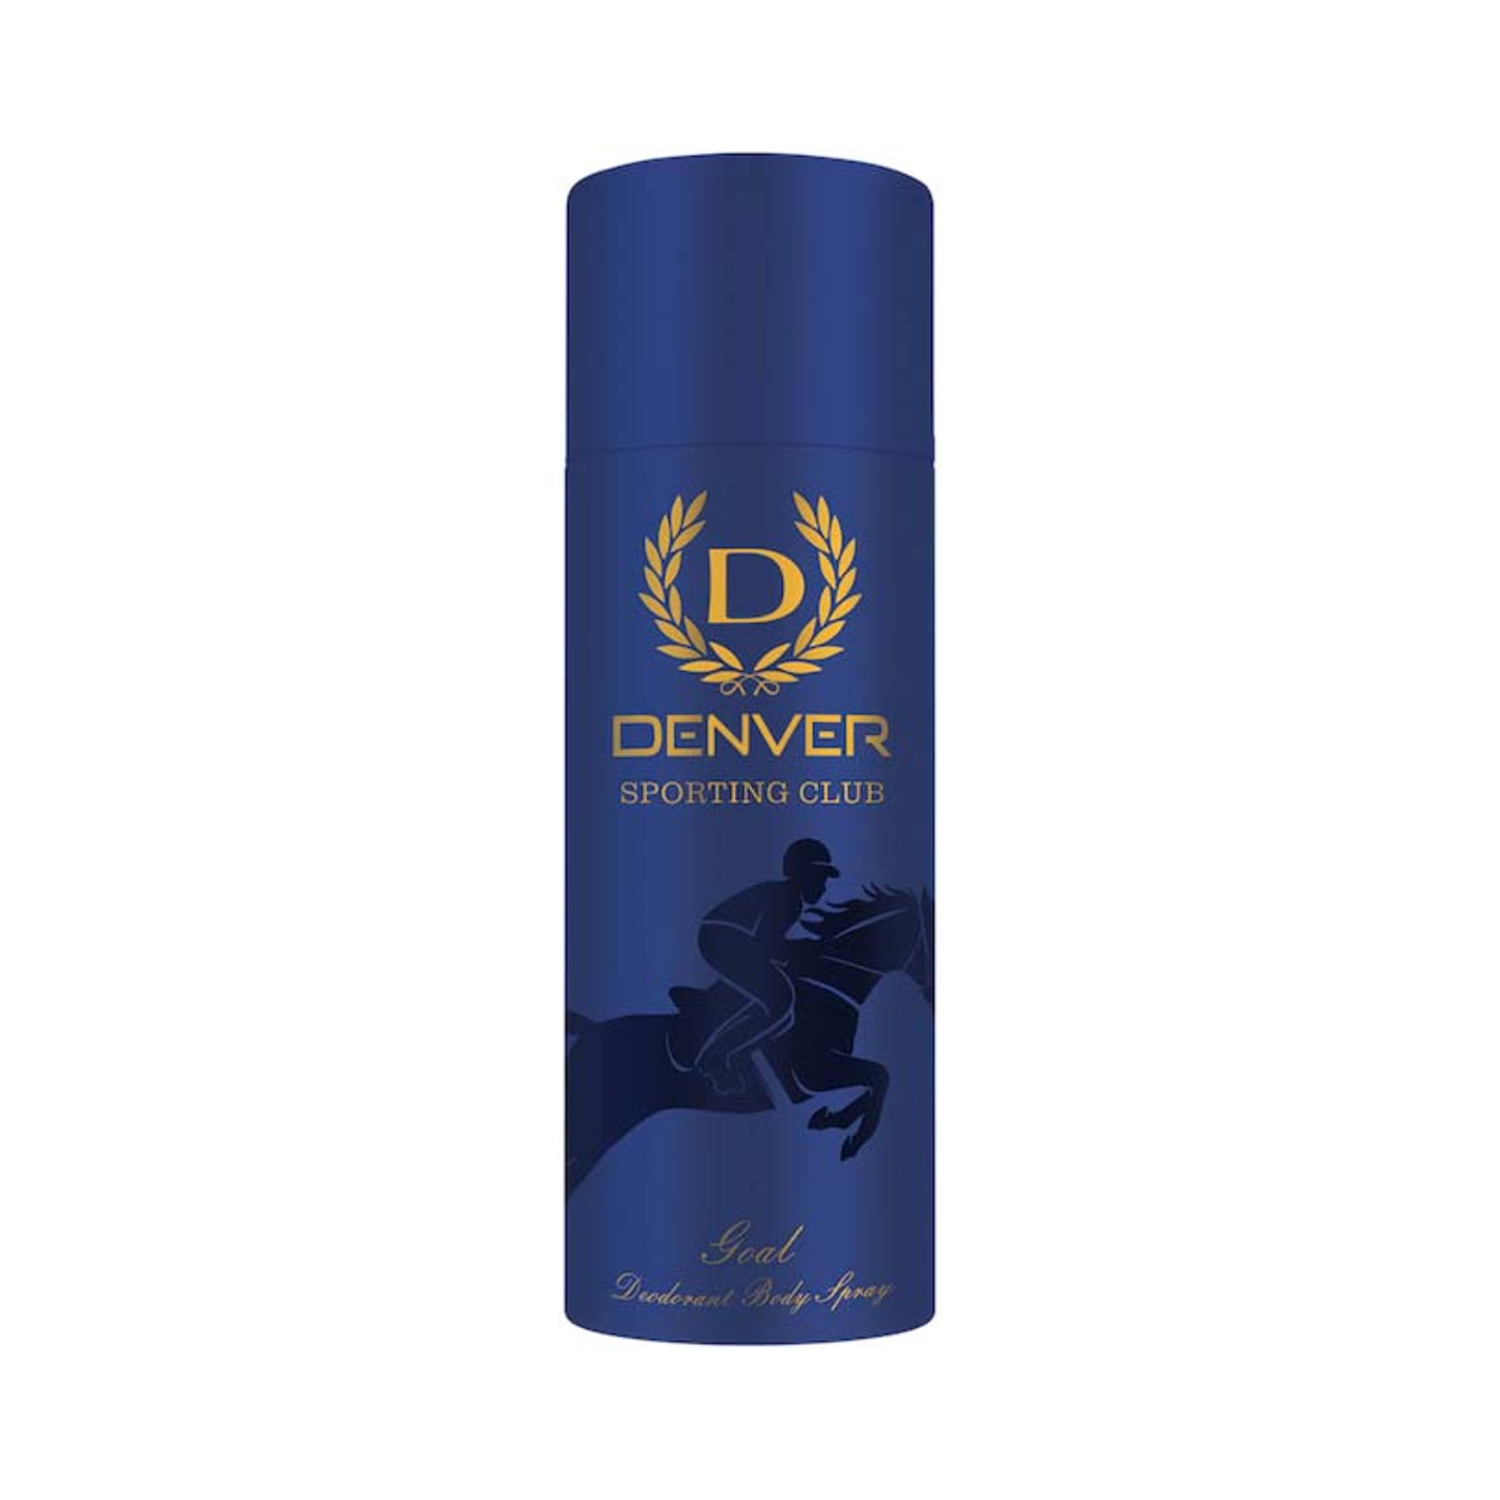 Denver Sporting Club Goal Deodorant Body Spray for Men (200ml)